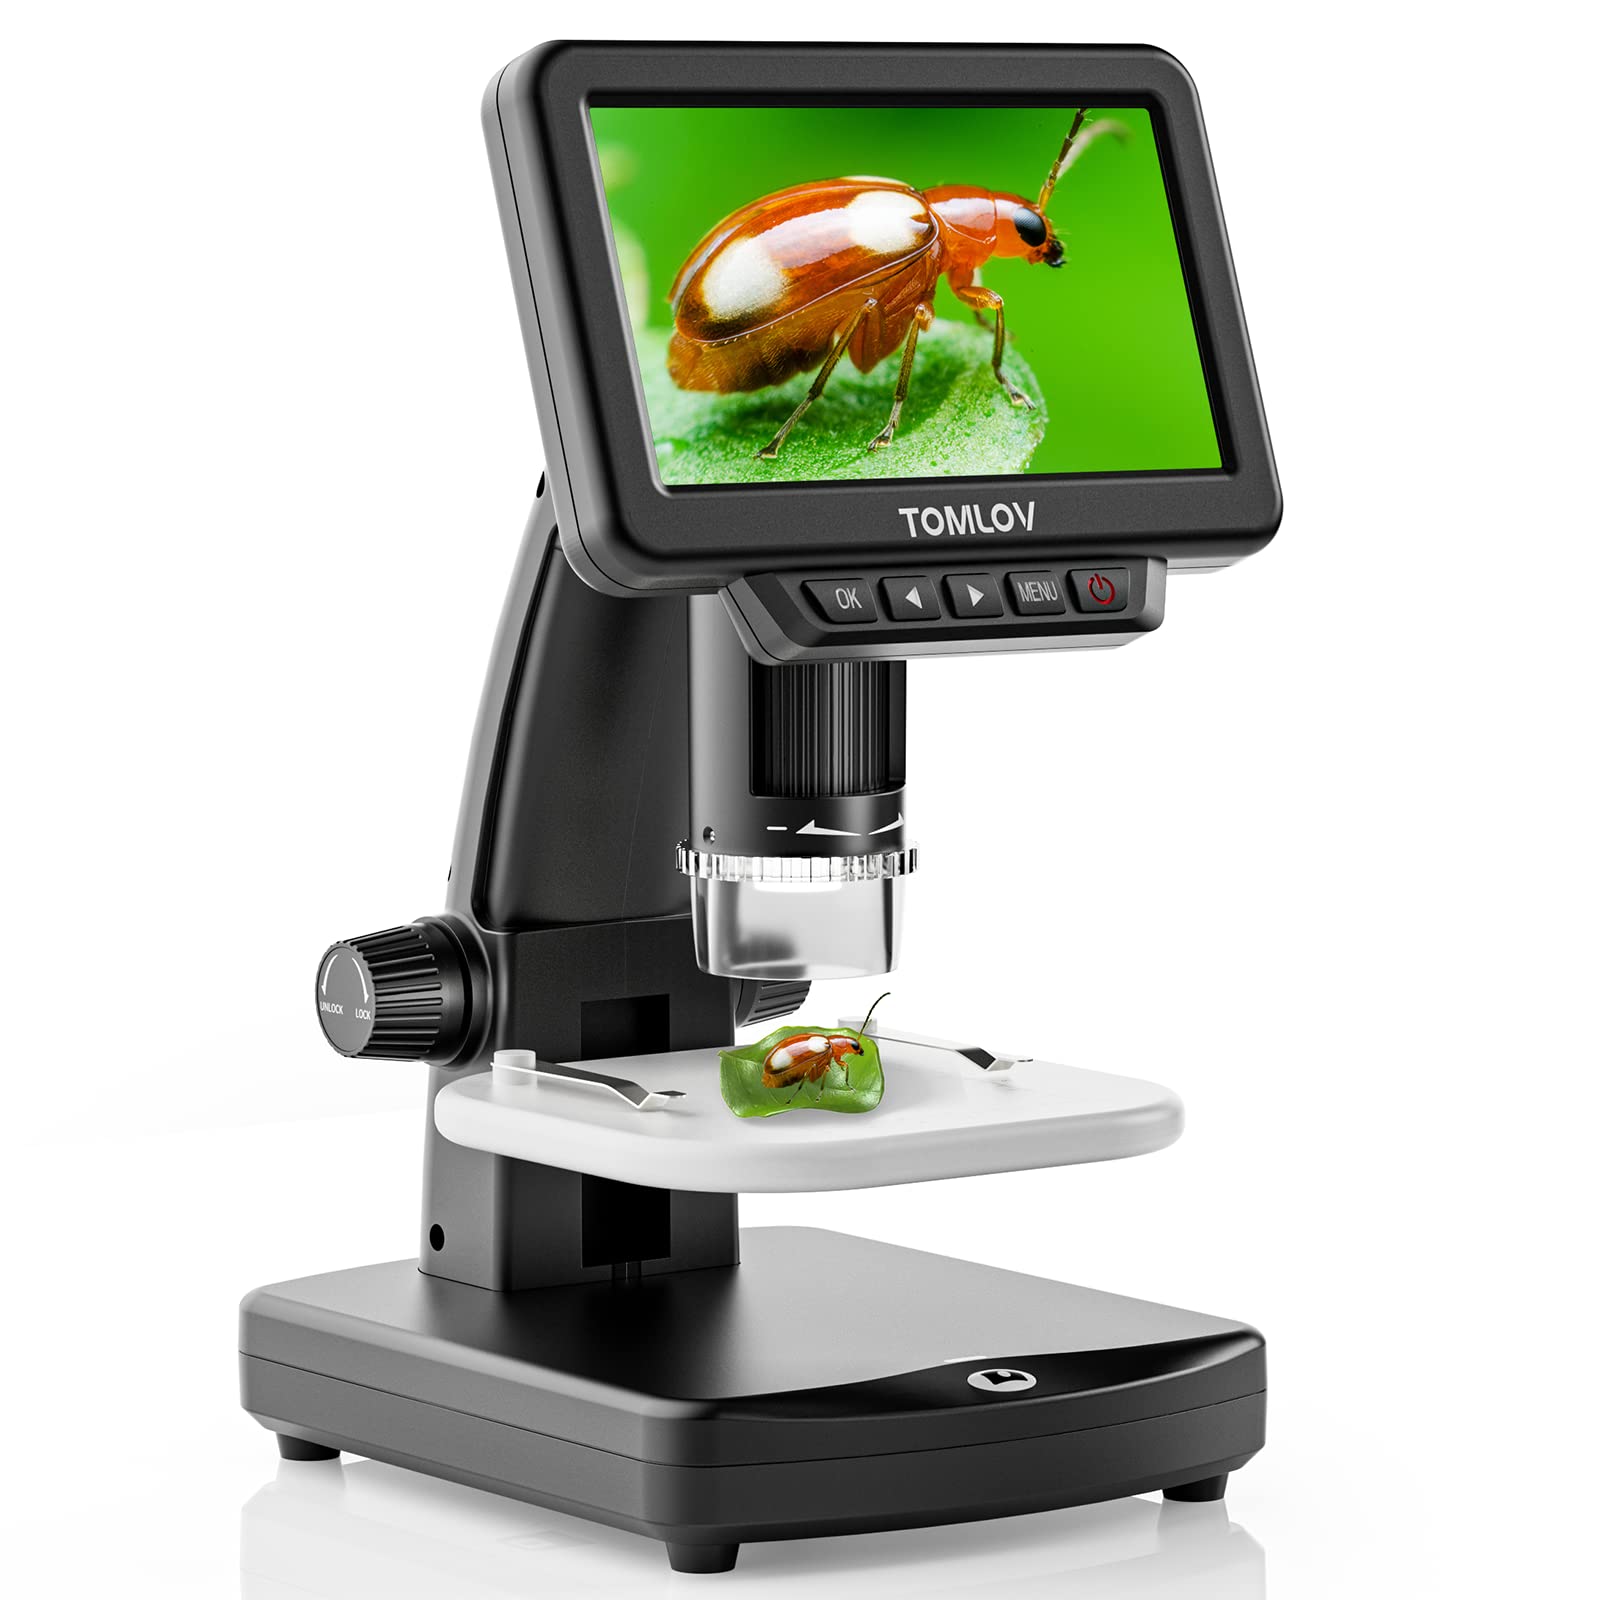 TOMLOV DM13 LCD Digital Microscope, Coin Microscope with 5